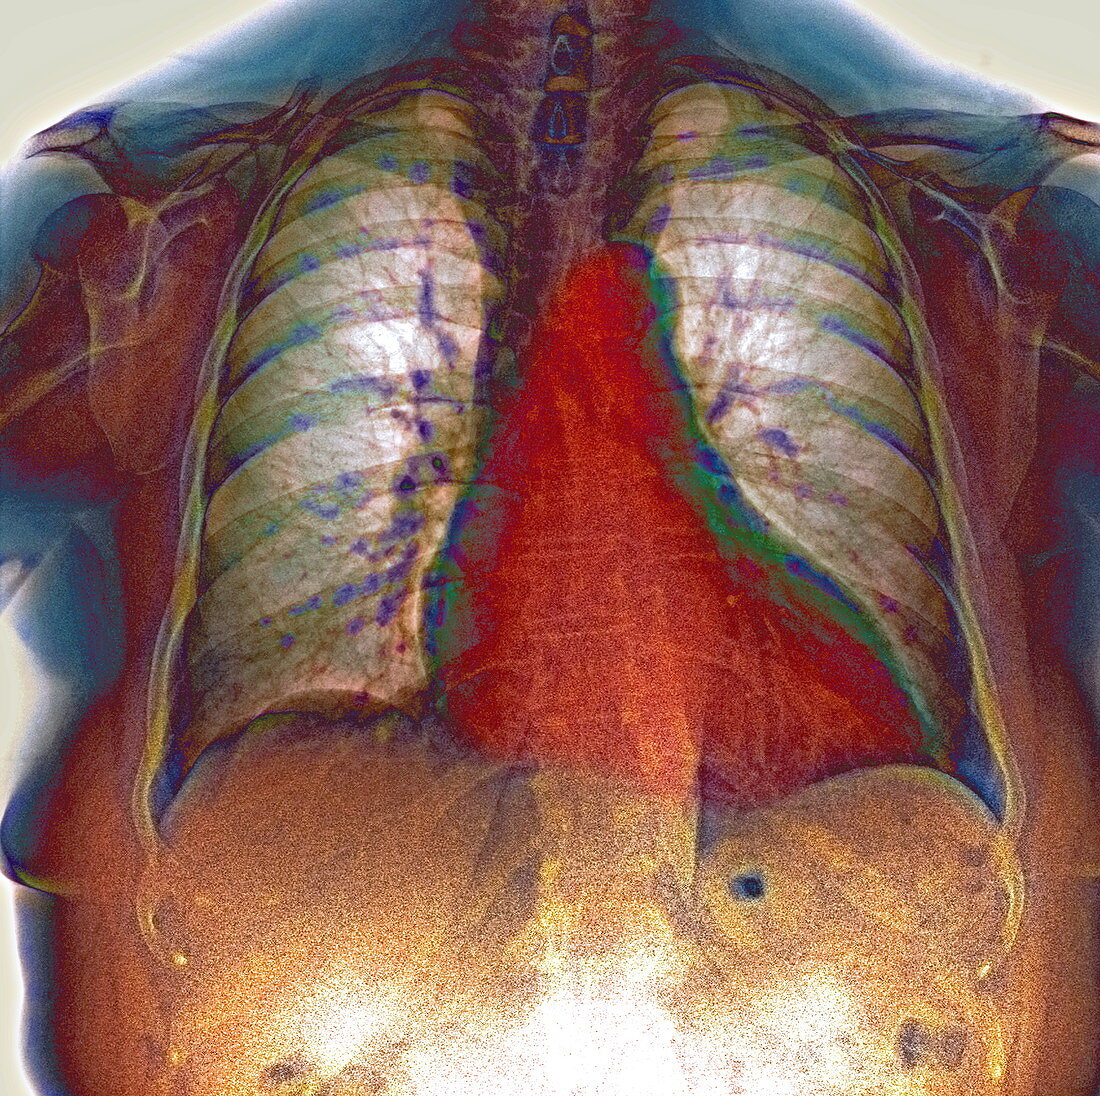 Enlarged heart,X-ray